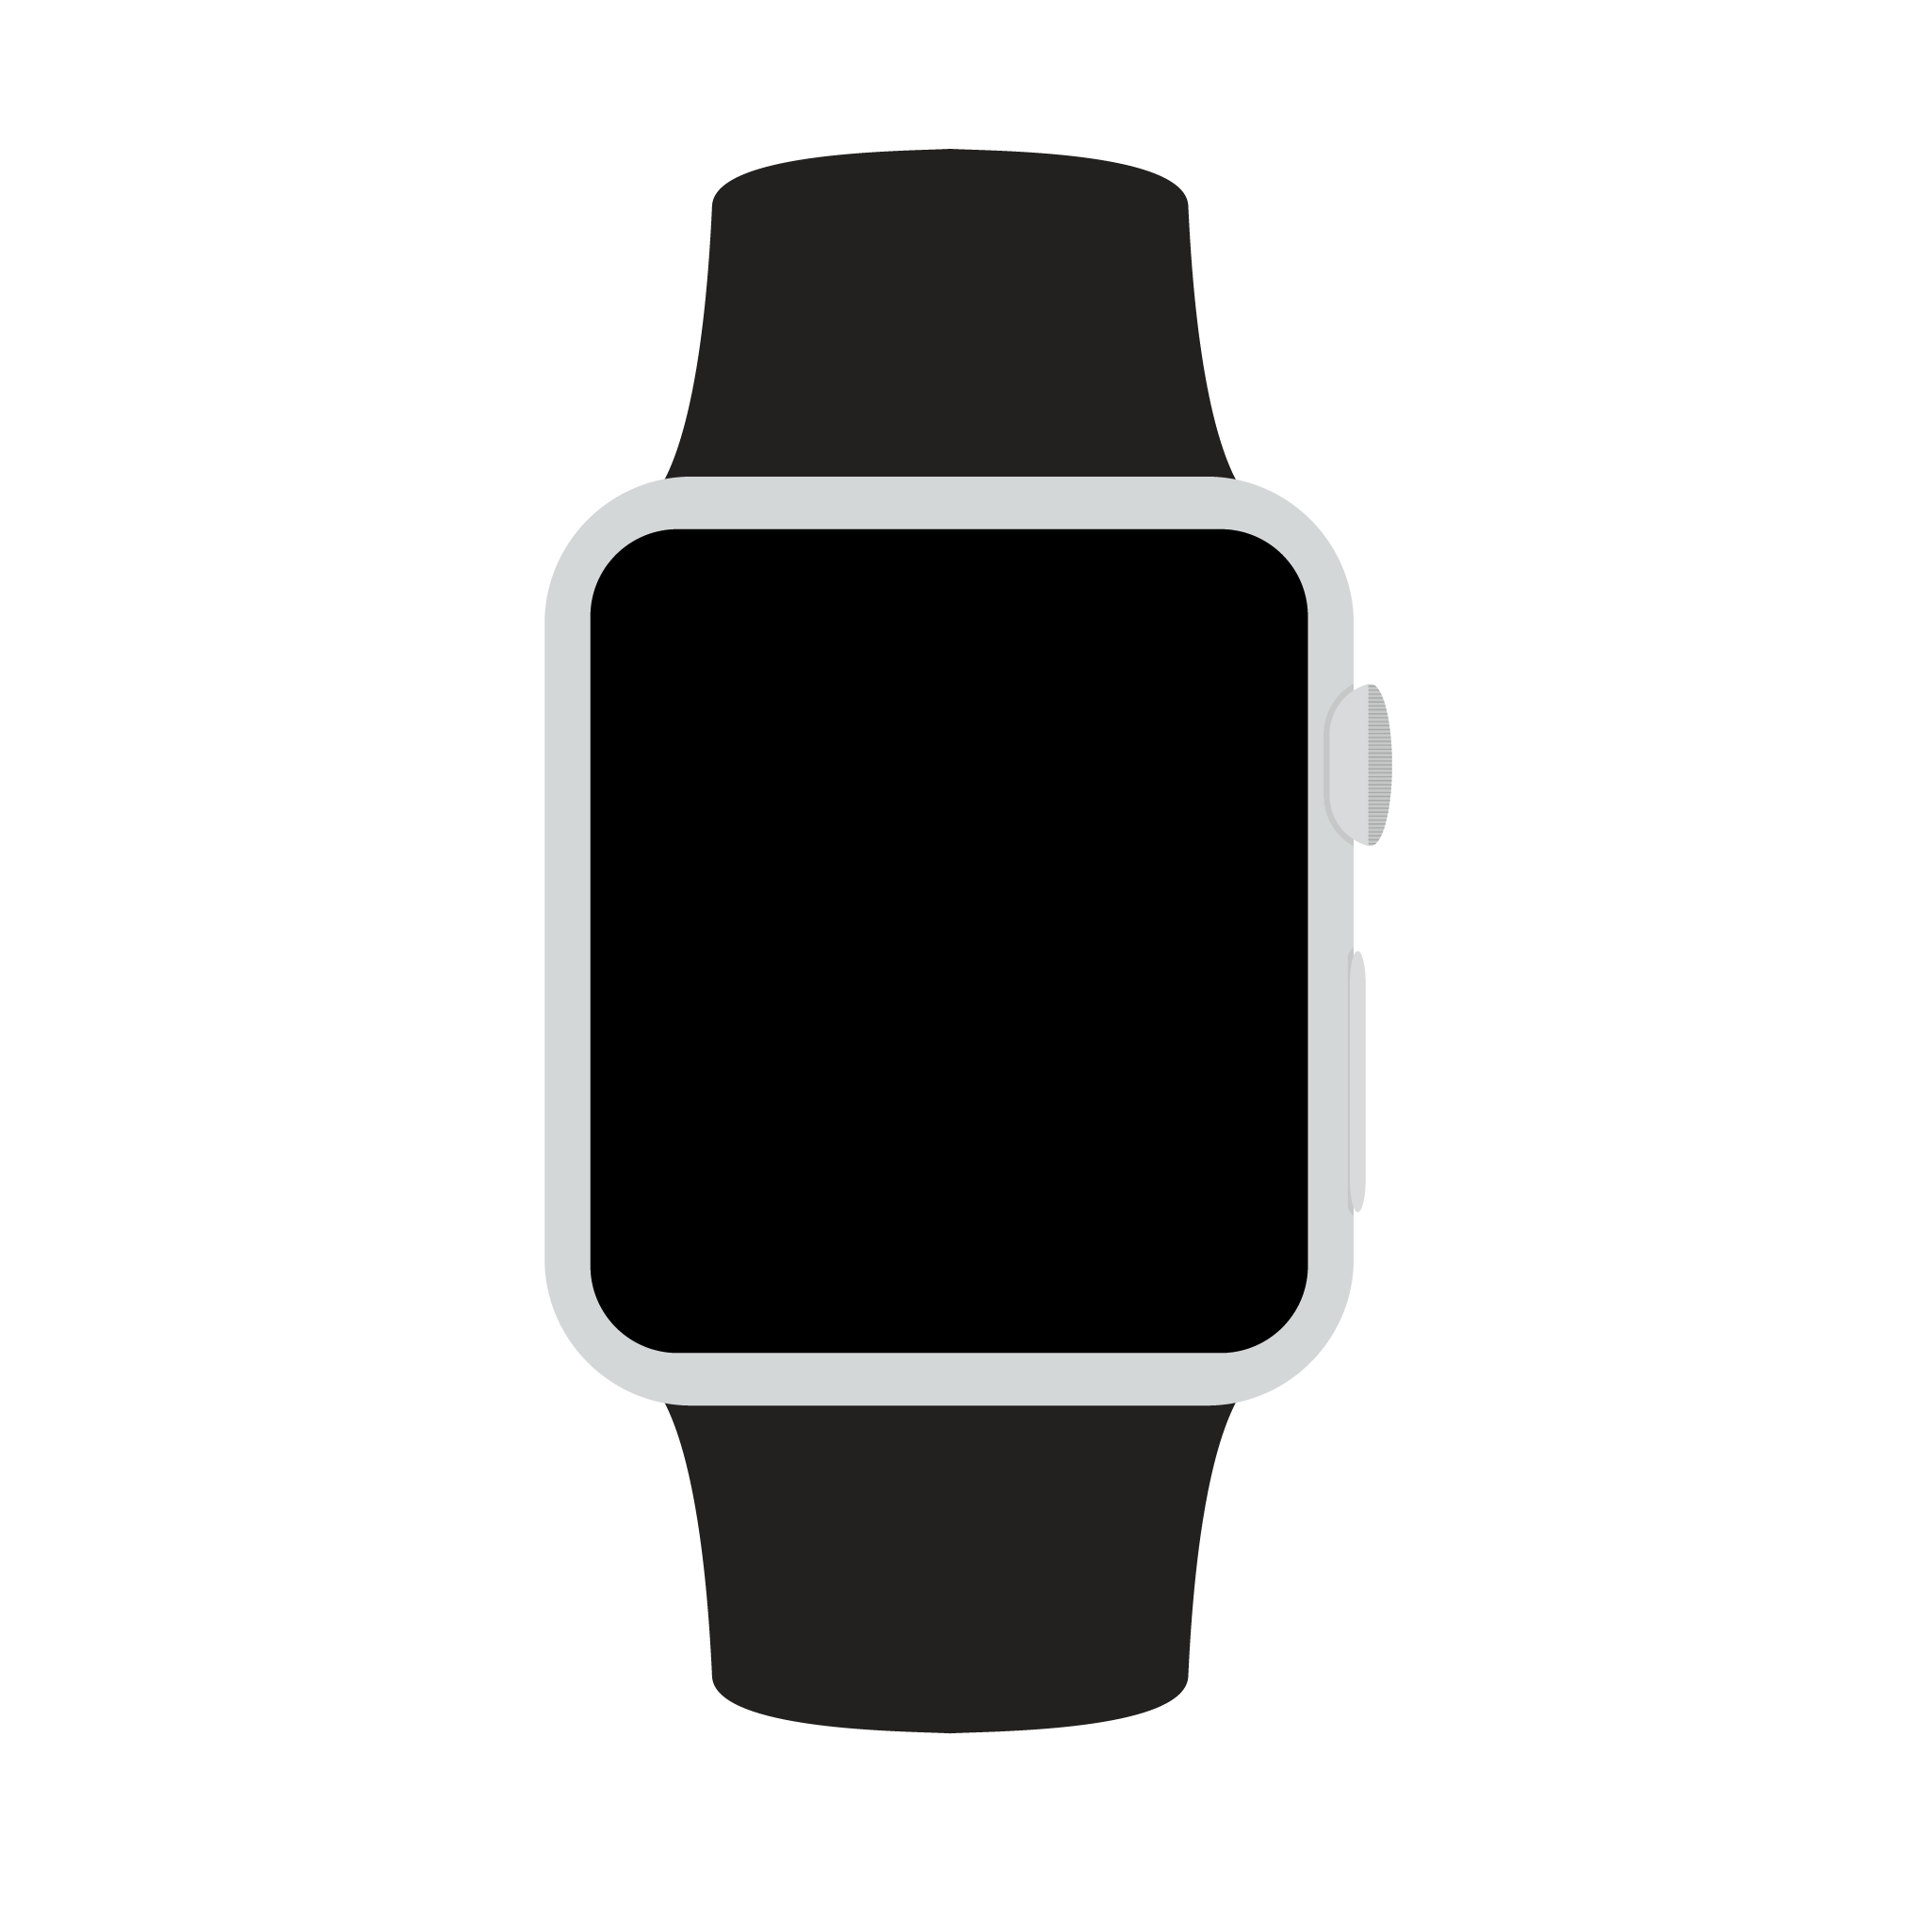 Black watch illustration